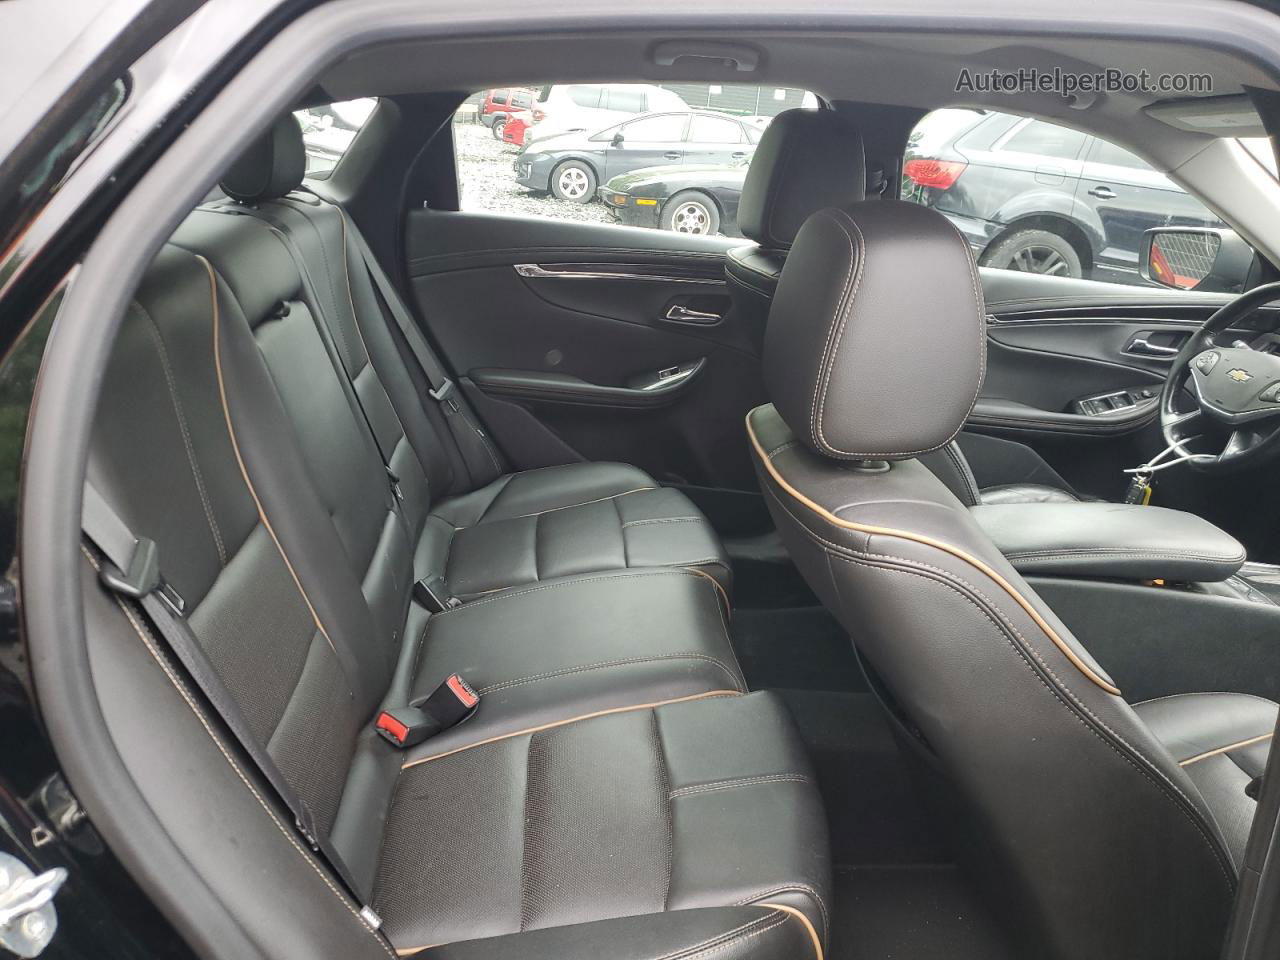 2017 Chevrolet Impala Premier Черный vin: 1G1145S31HU159913